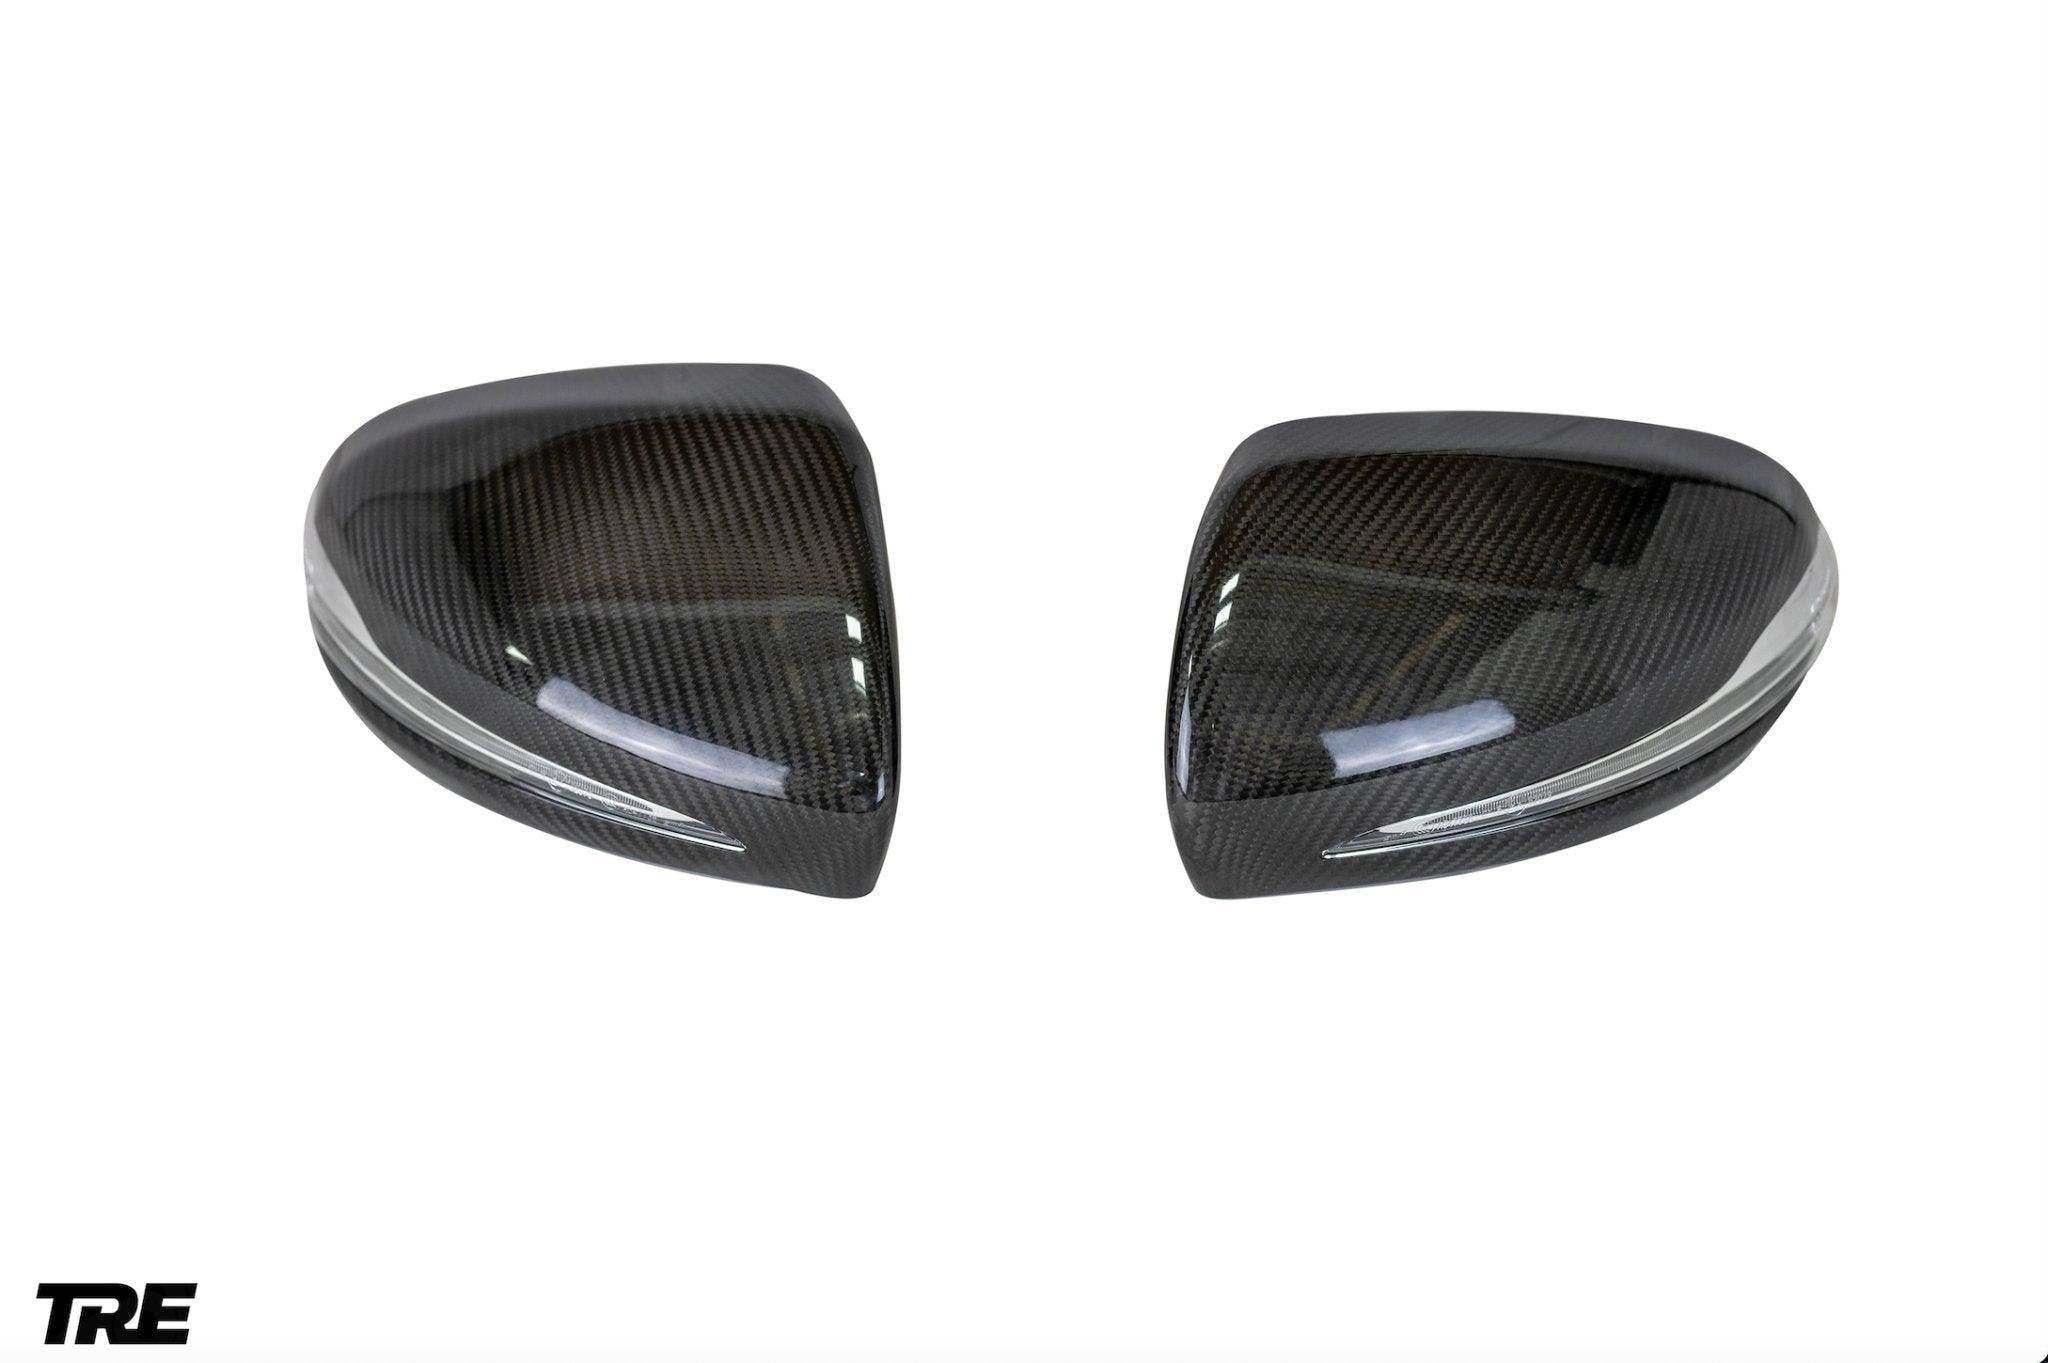 TRE Pre-preg Carbon Fibre Wing Mirror Covers for Mercedes C Class & C63 (2014+, W205), Mirror Covers, TRE - AUTOID | Premium Automotive Accessories